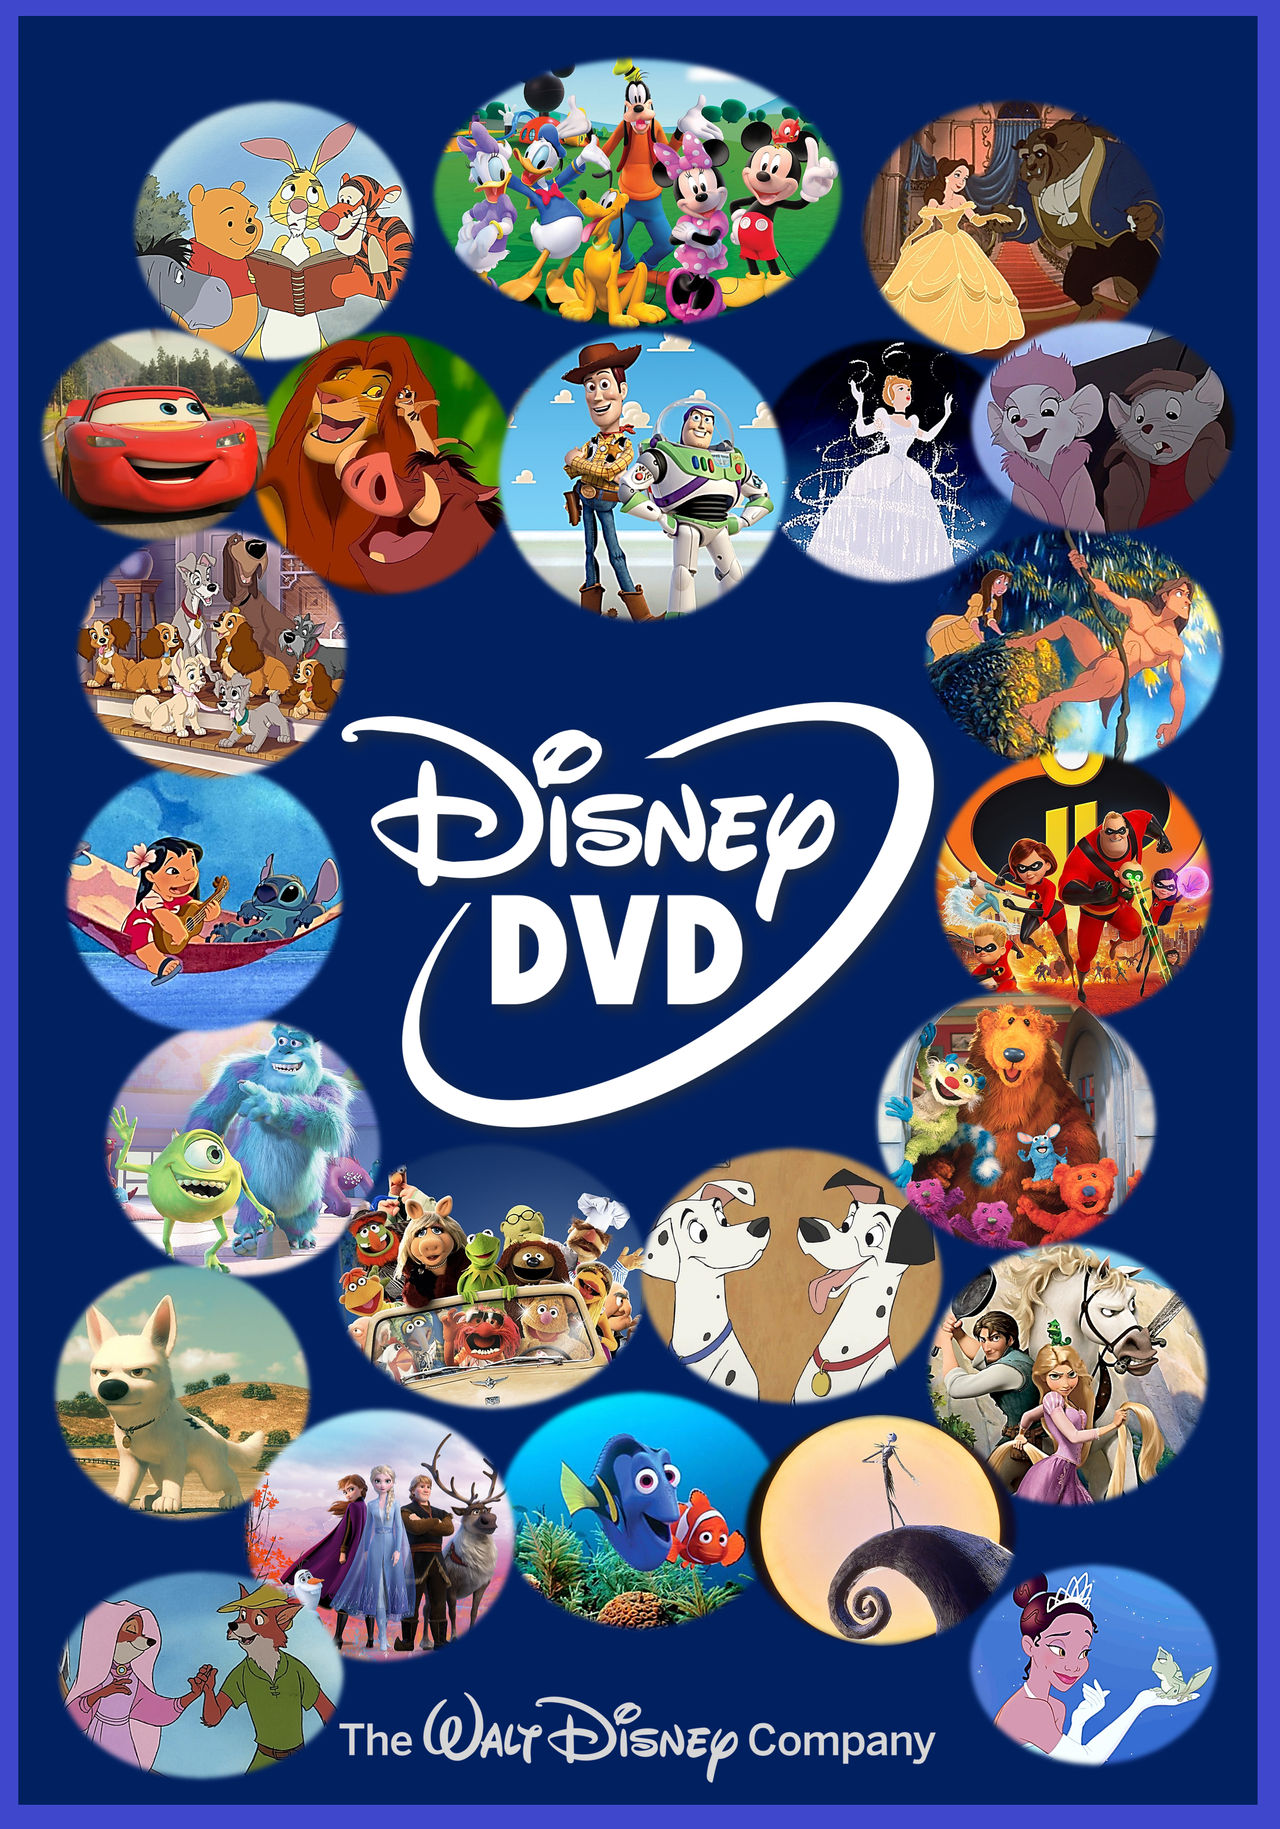 Disney DVD via Walt Disney Home Entertainment by gikesmanners1995